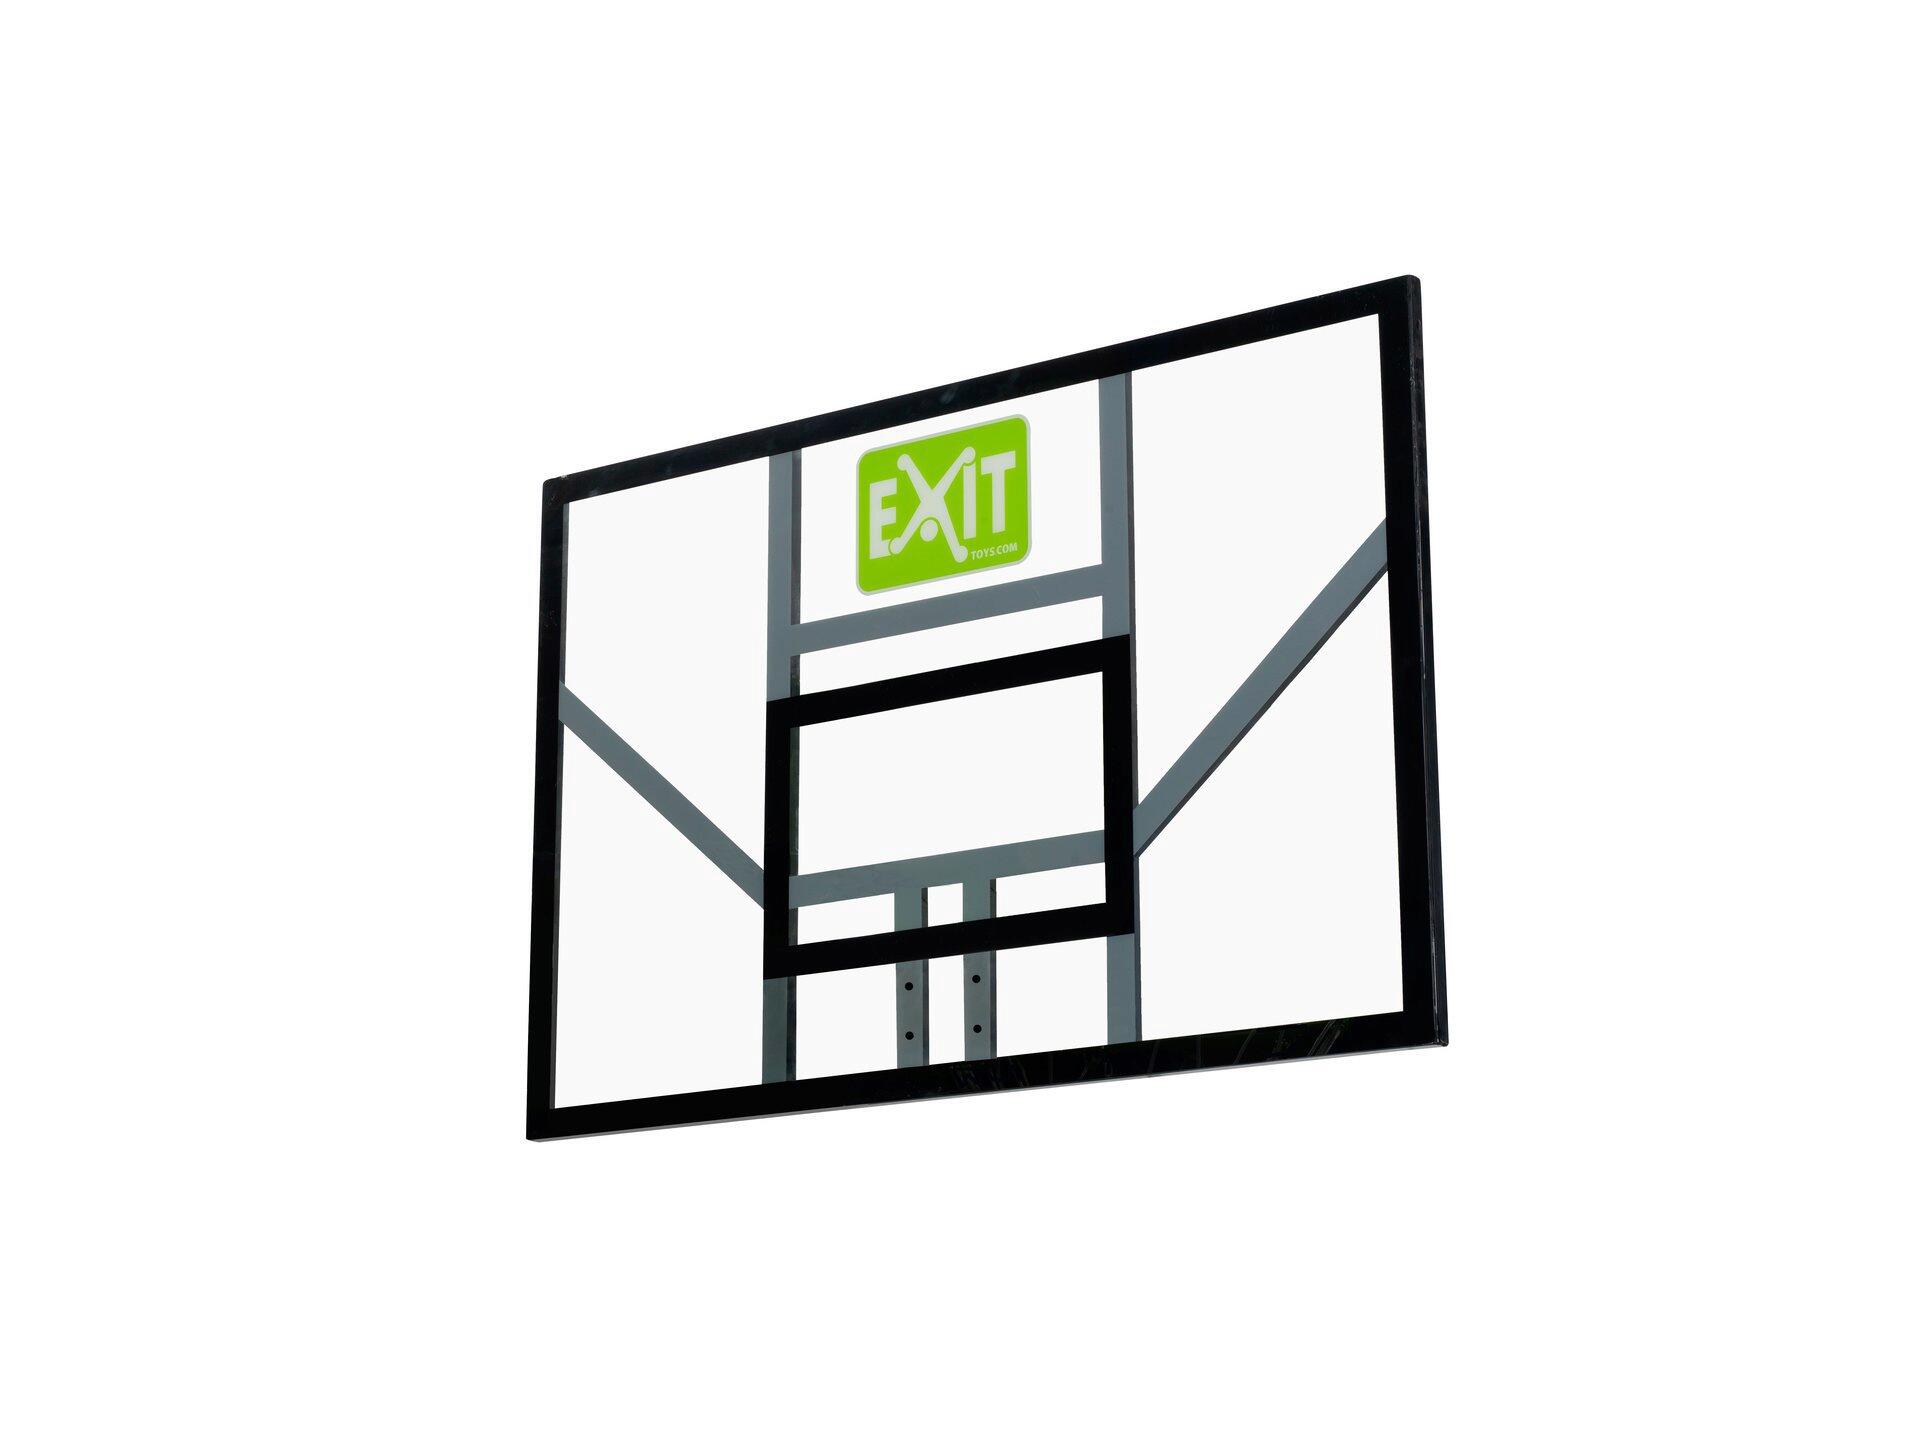 Exit Toys Galaxy basketbalbord groen/zwart